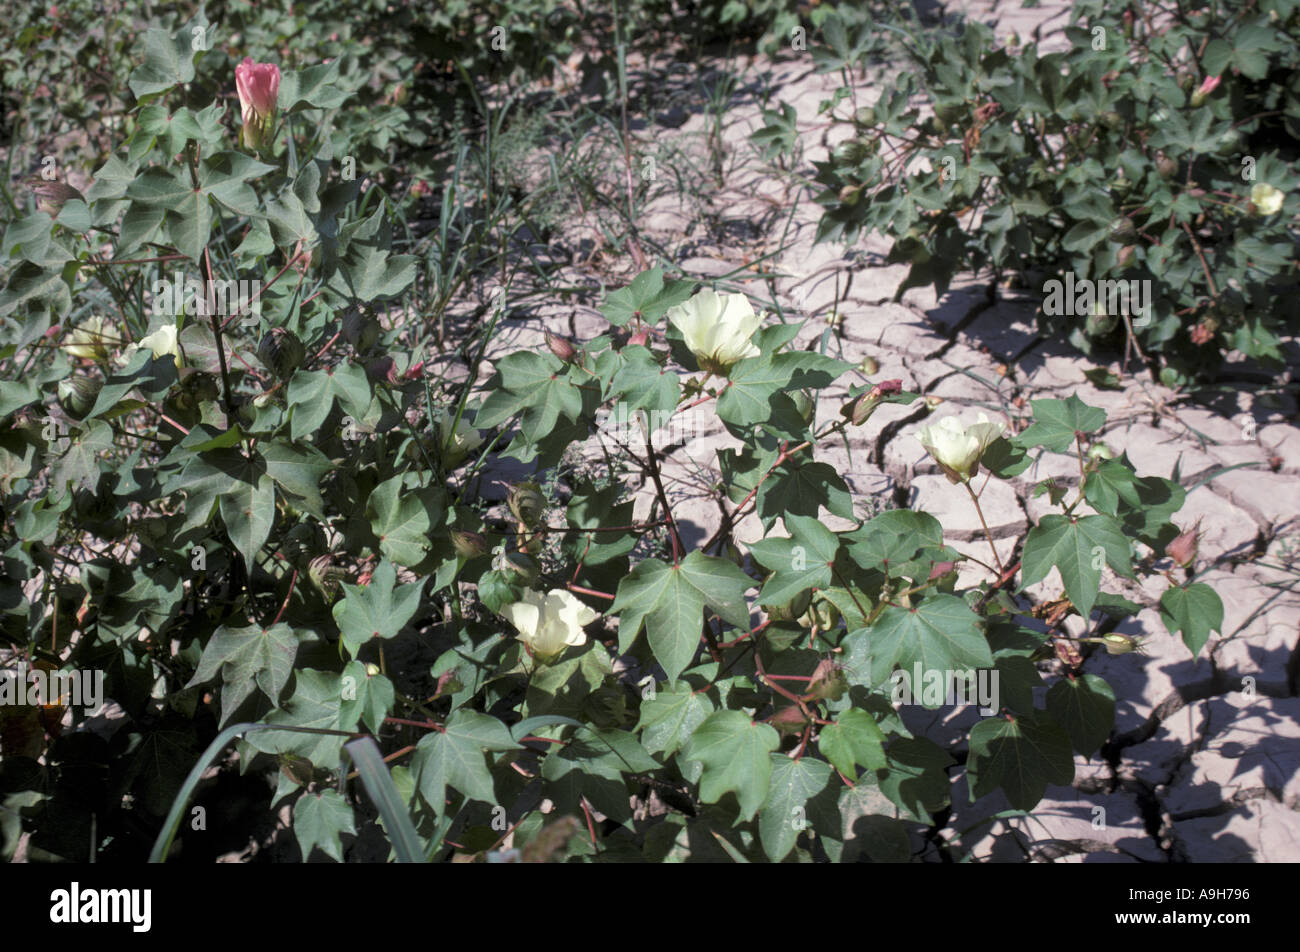 Farming Crop Cotton Cotton plants Menderes Delta Turkey September Stock Photo